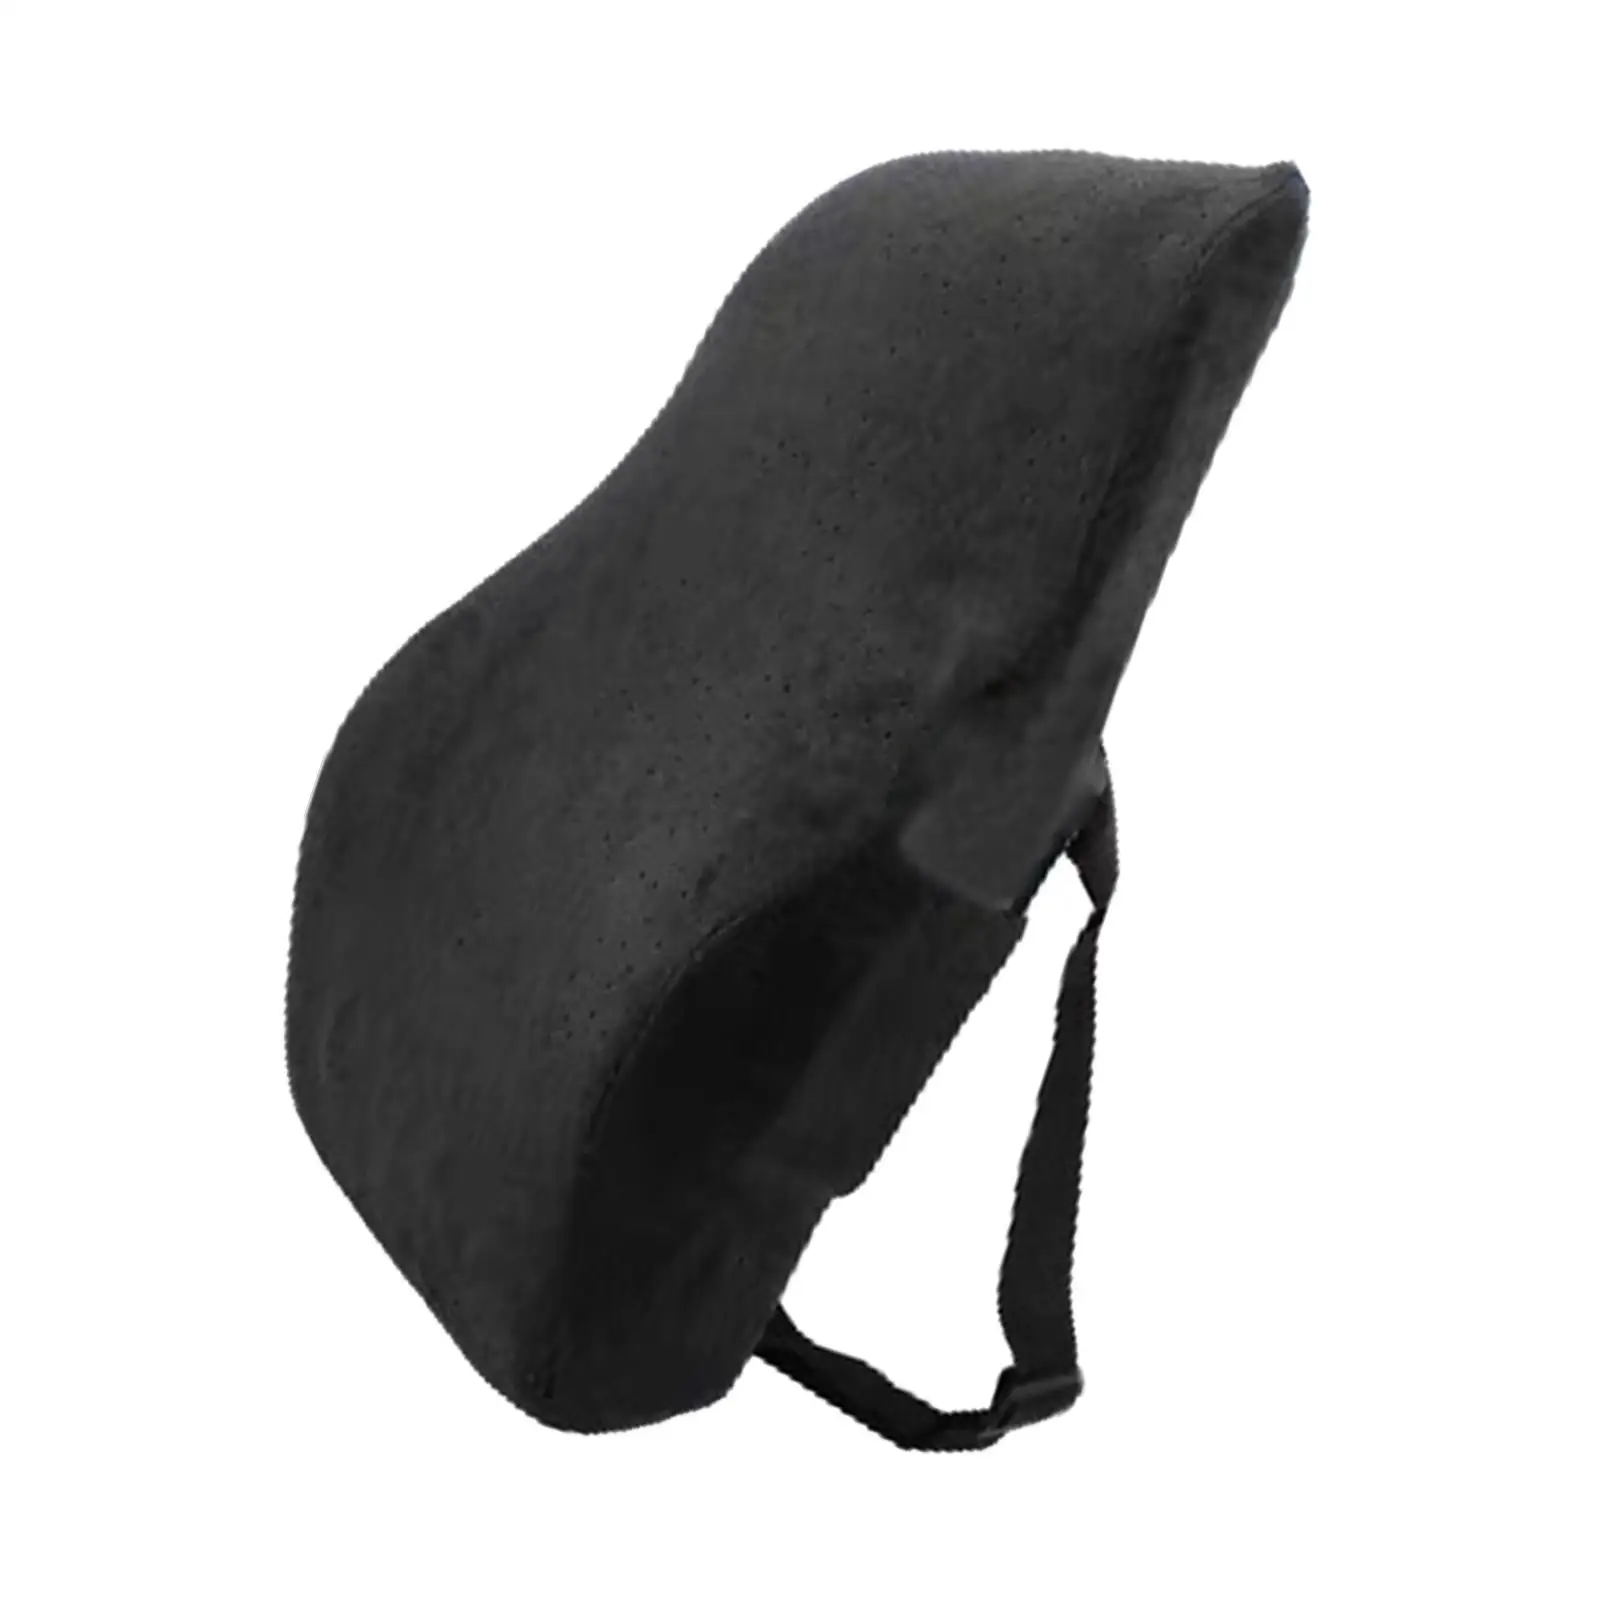 Car Lumbar Back Support Memory Foam Waist Soft Correct Sitting Posture Waist Cushion Fit for Travel